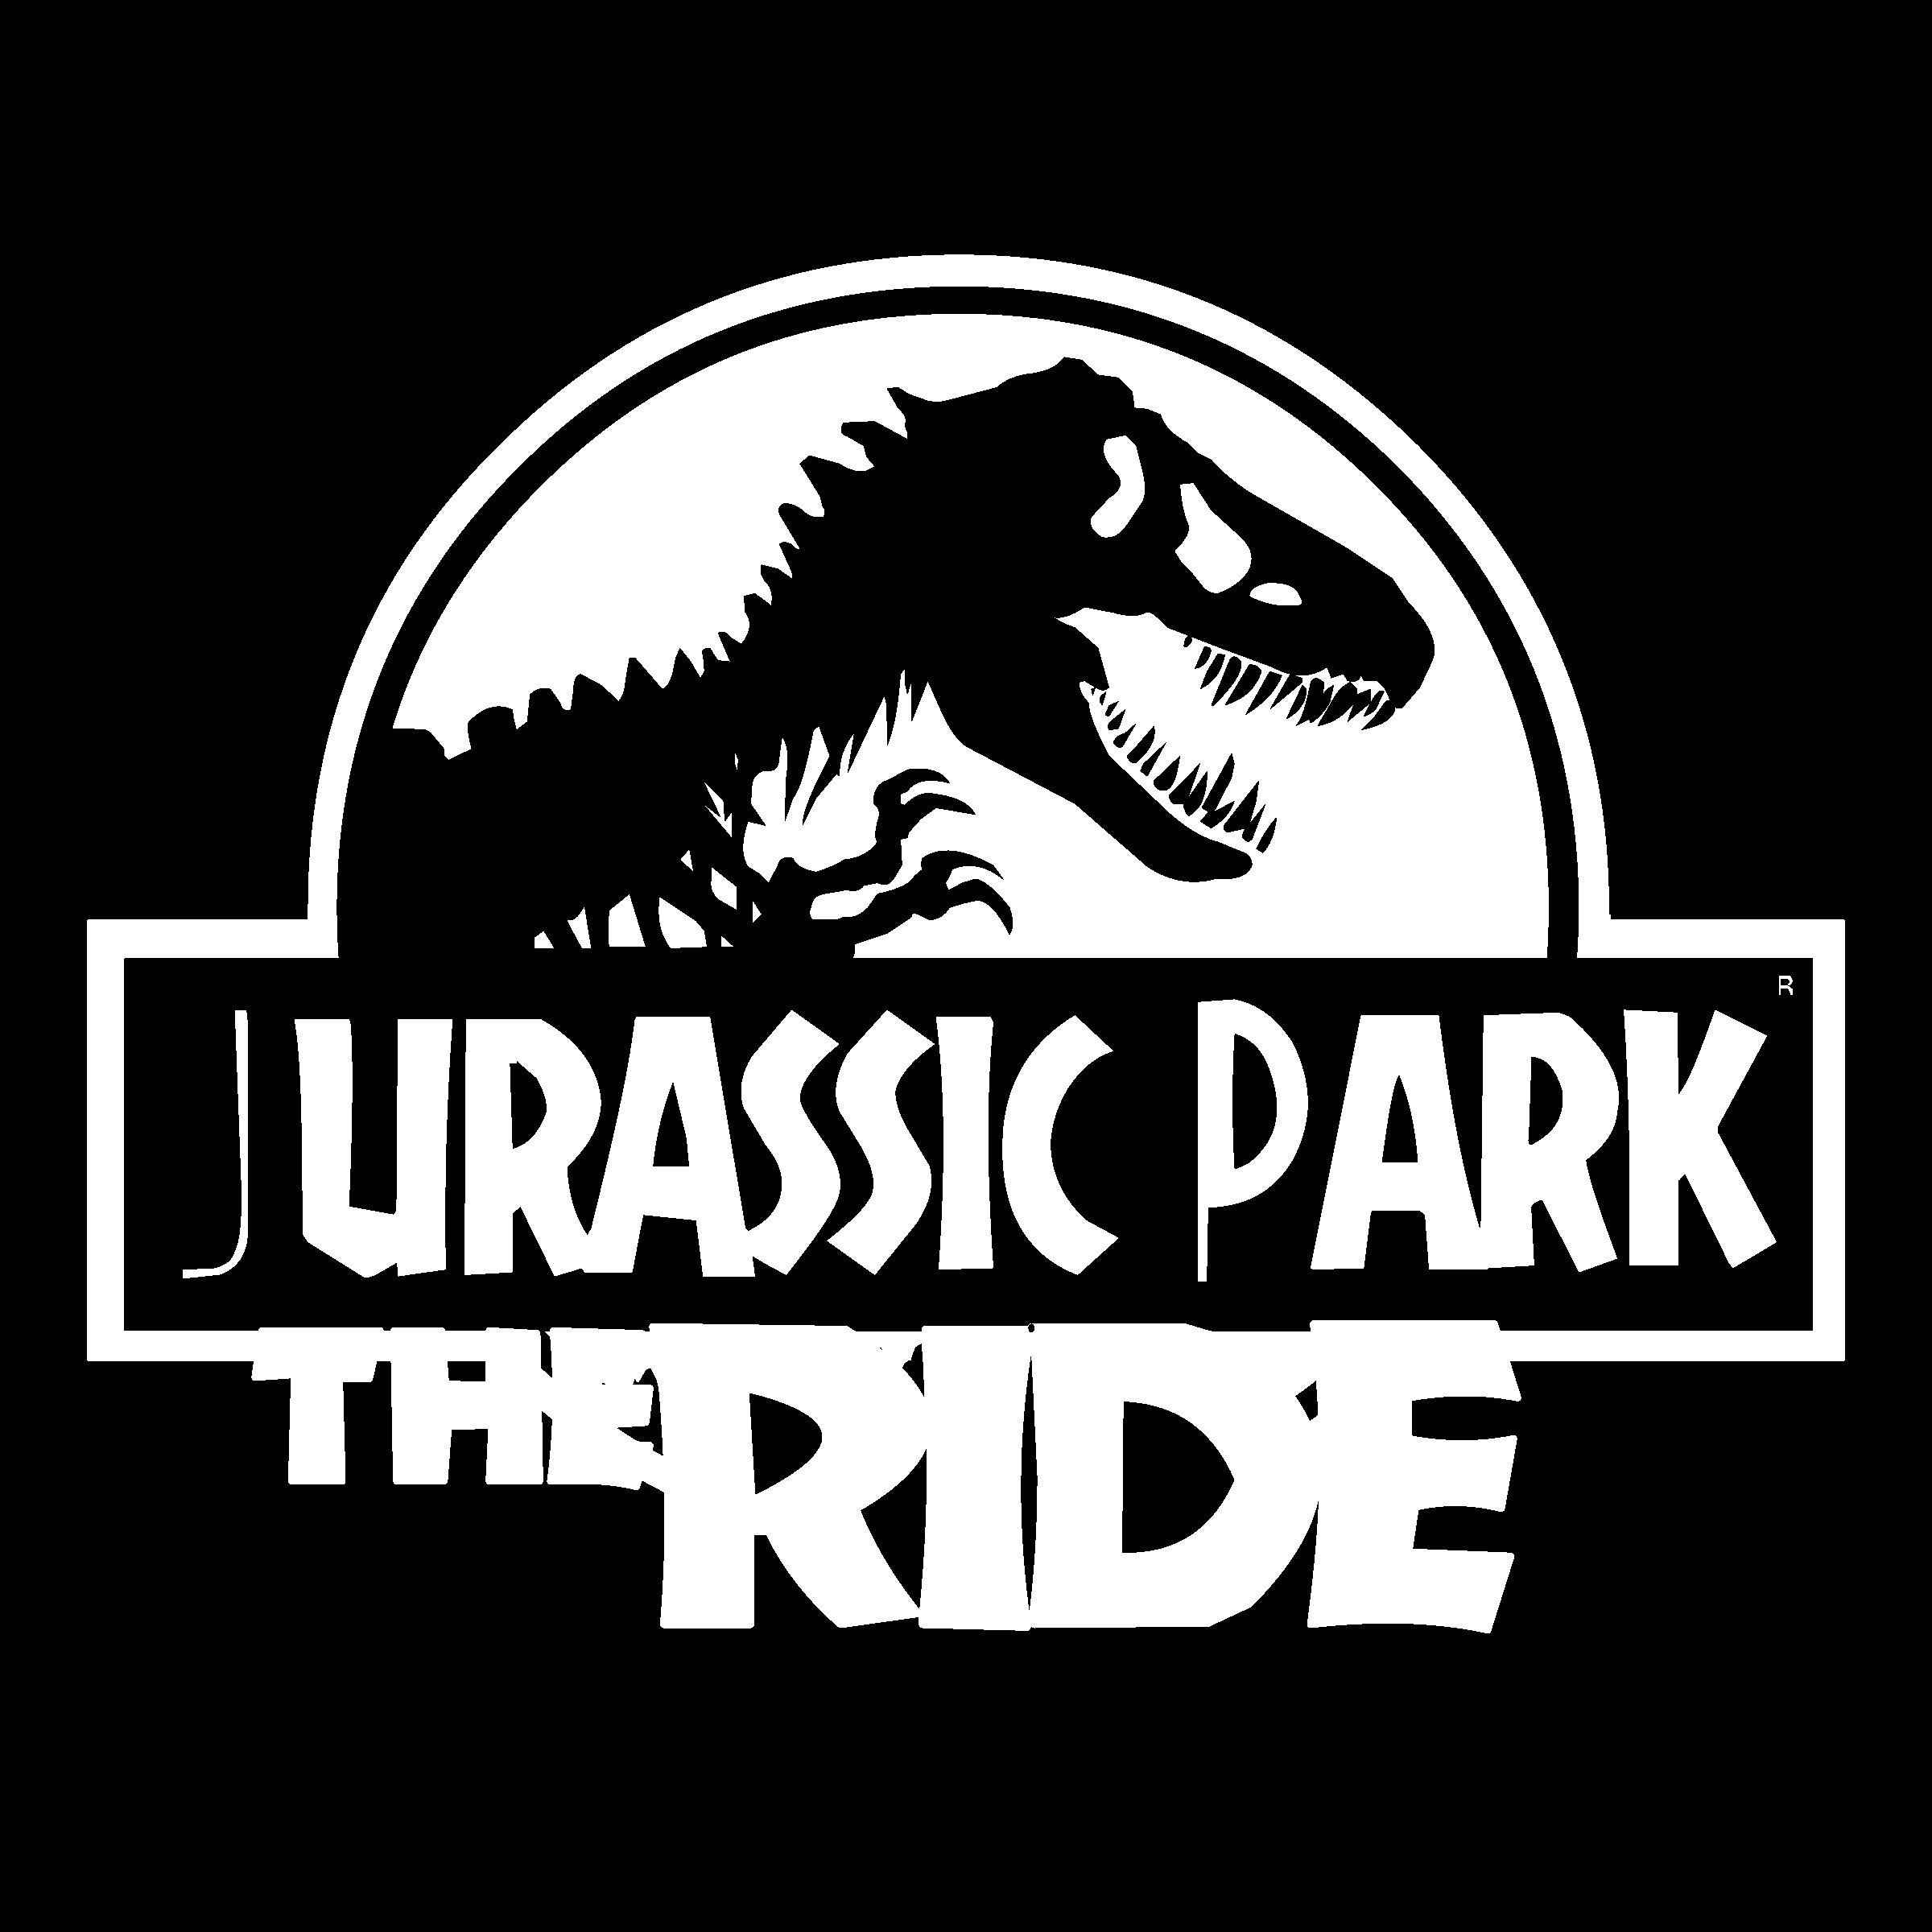 Jurassic Park Black and White Logo - Jurassic Park Logo PNG Transparent & SVG Vector